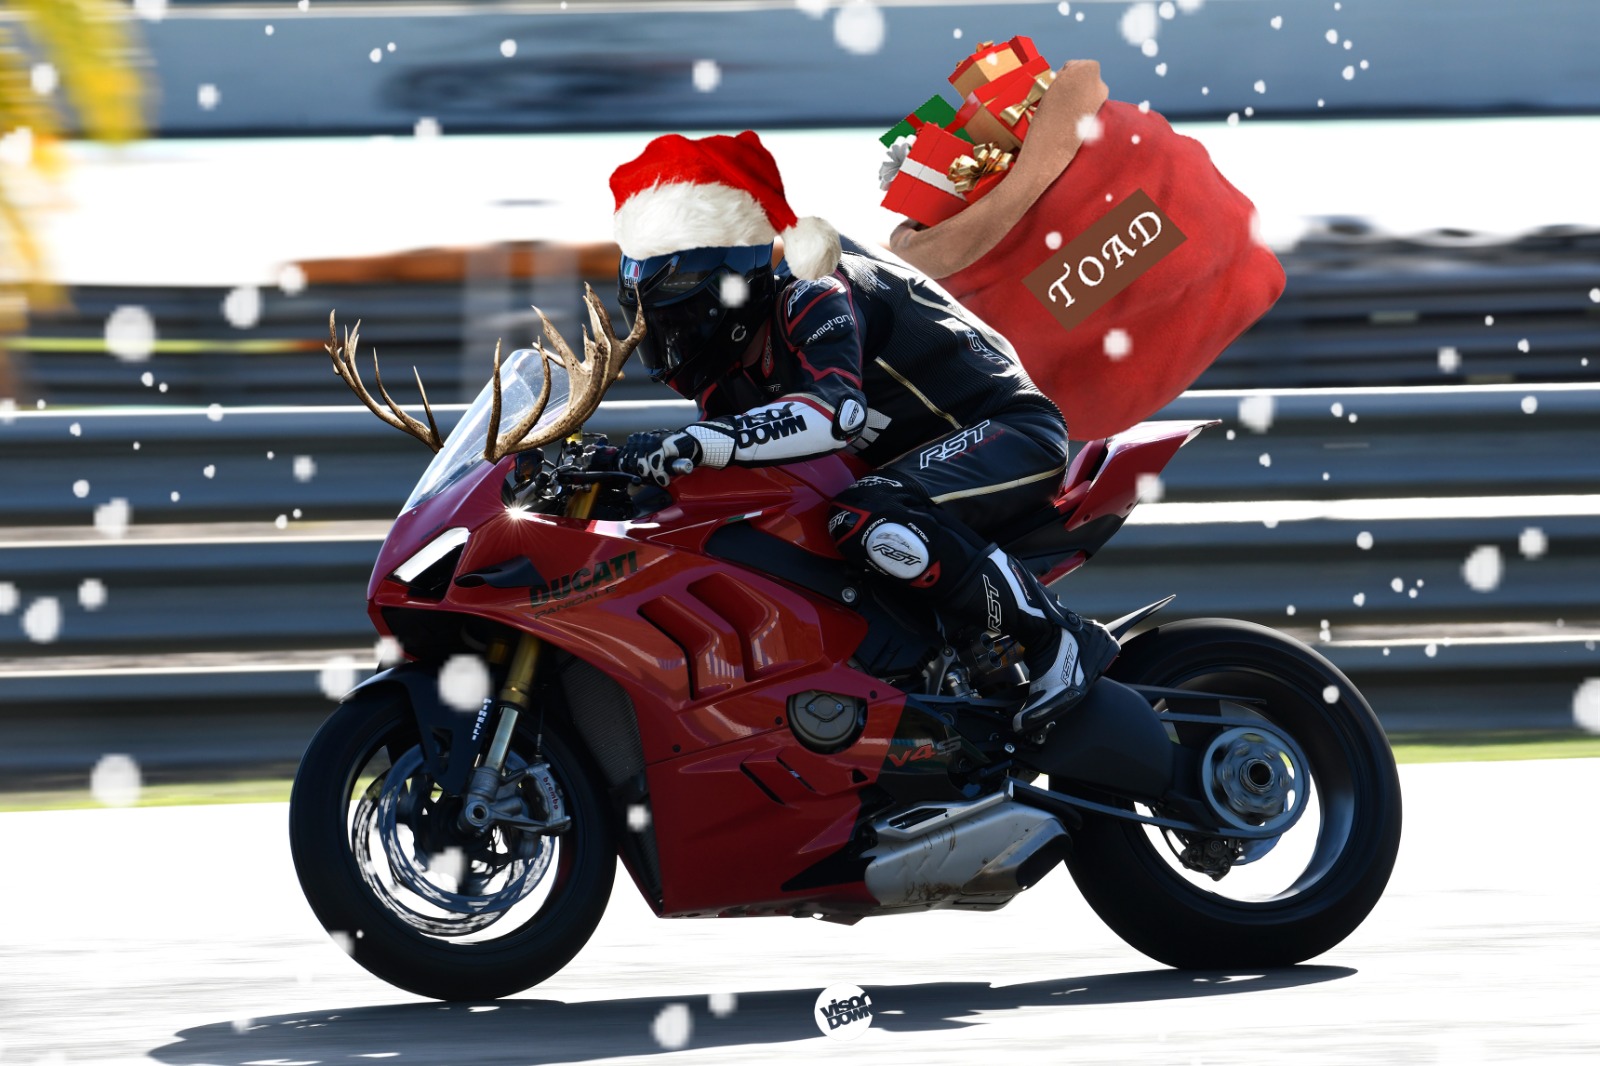 Christmas Motorcycle